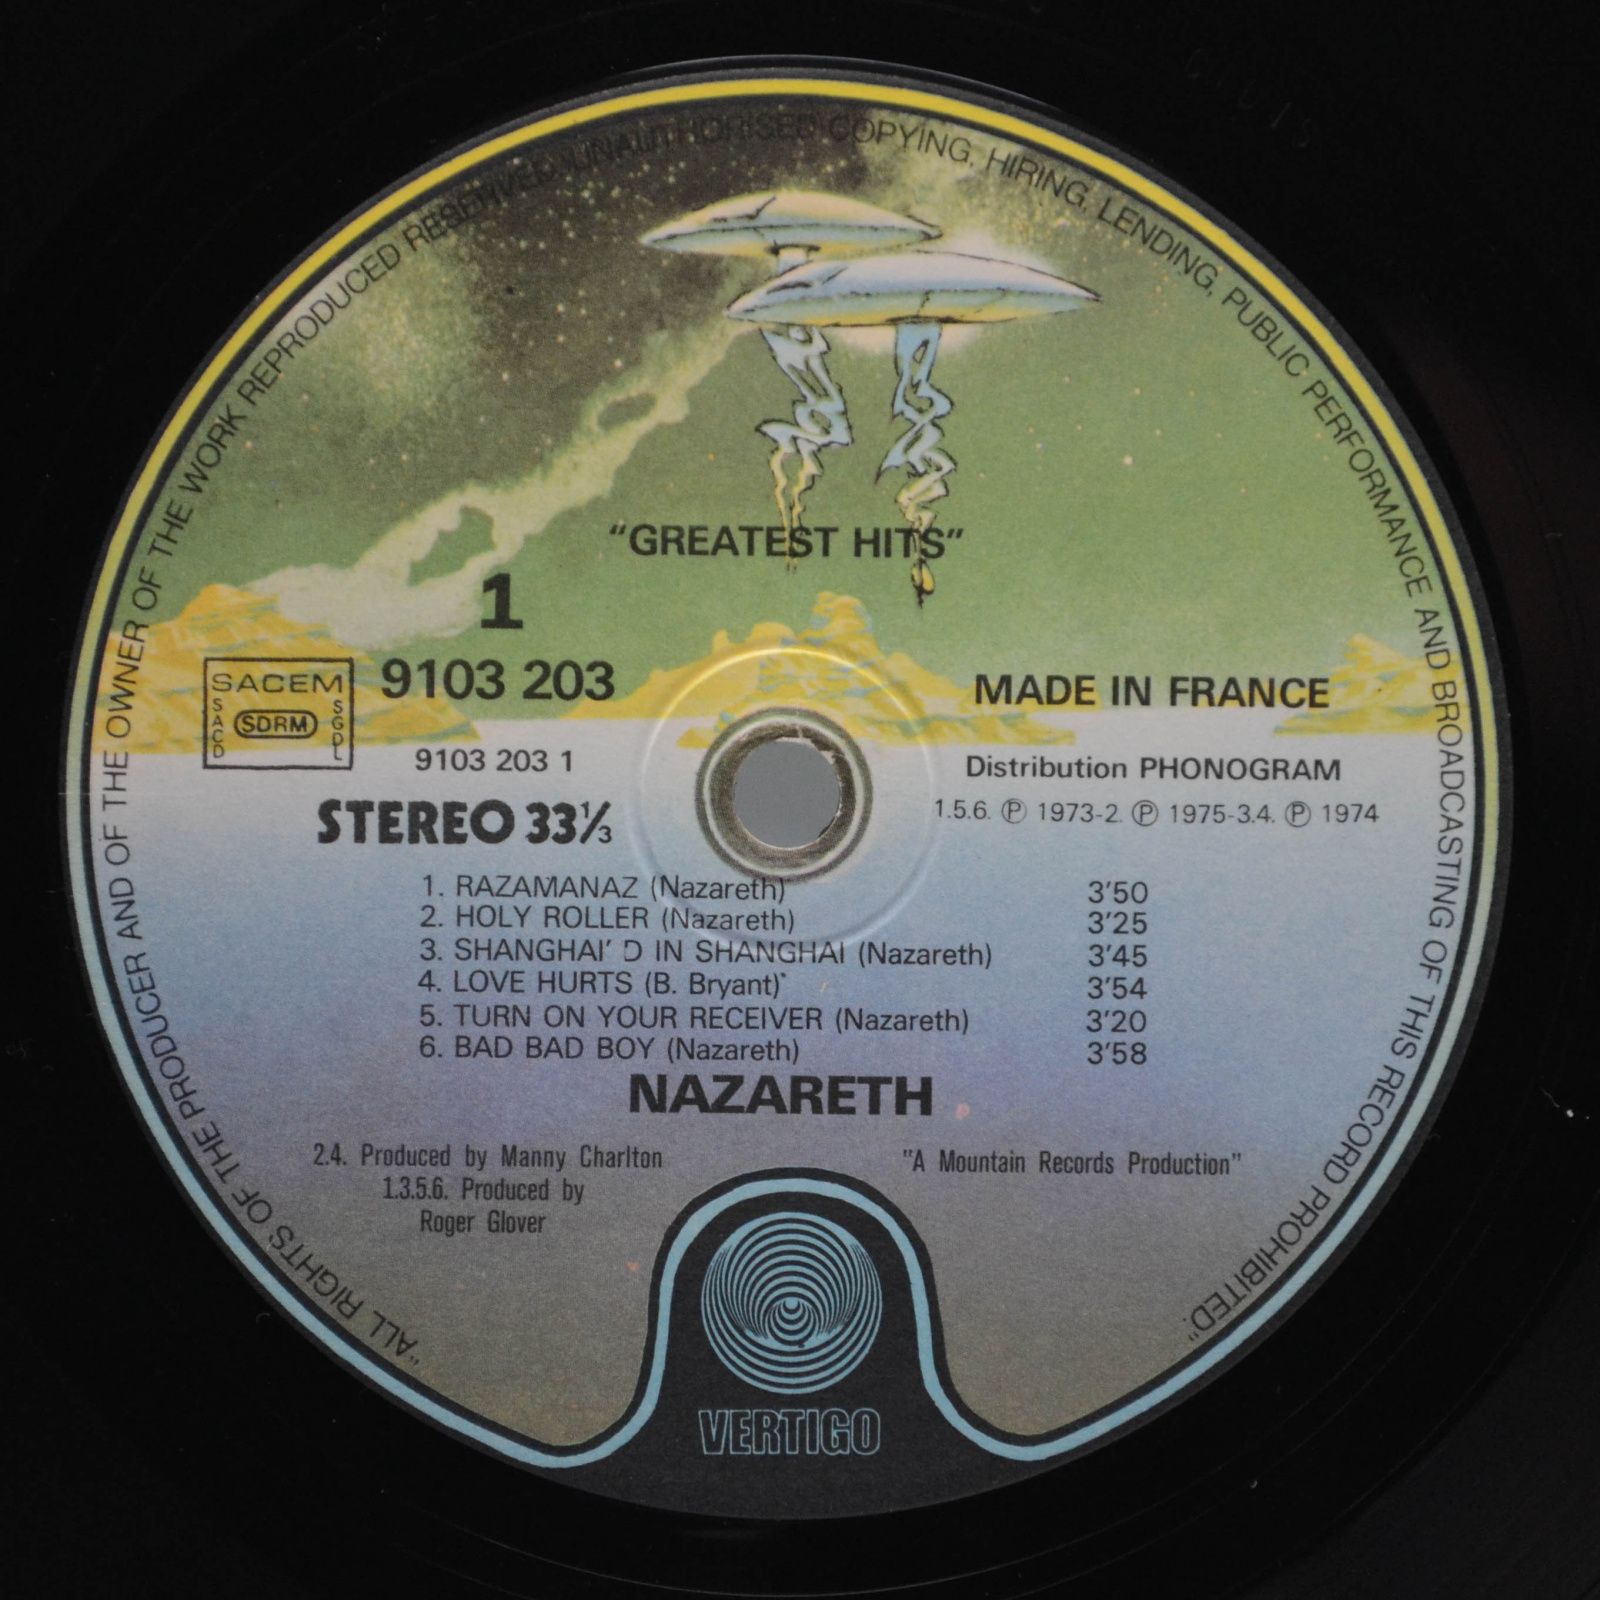 Nazareth — Greatest Hits, 1975